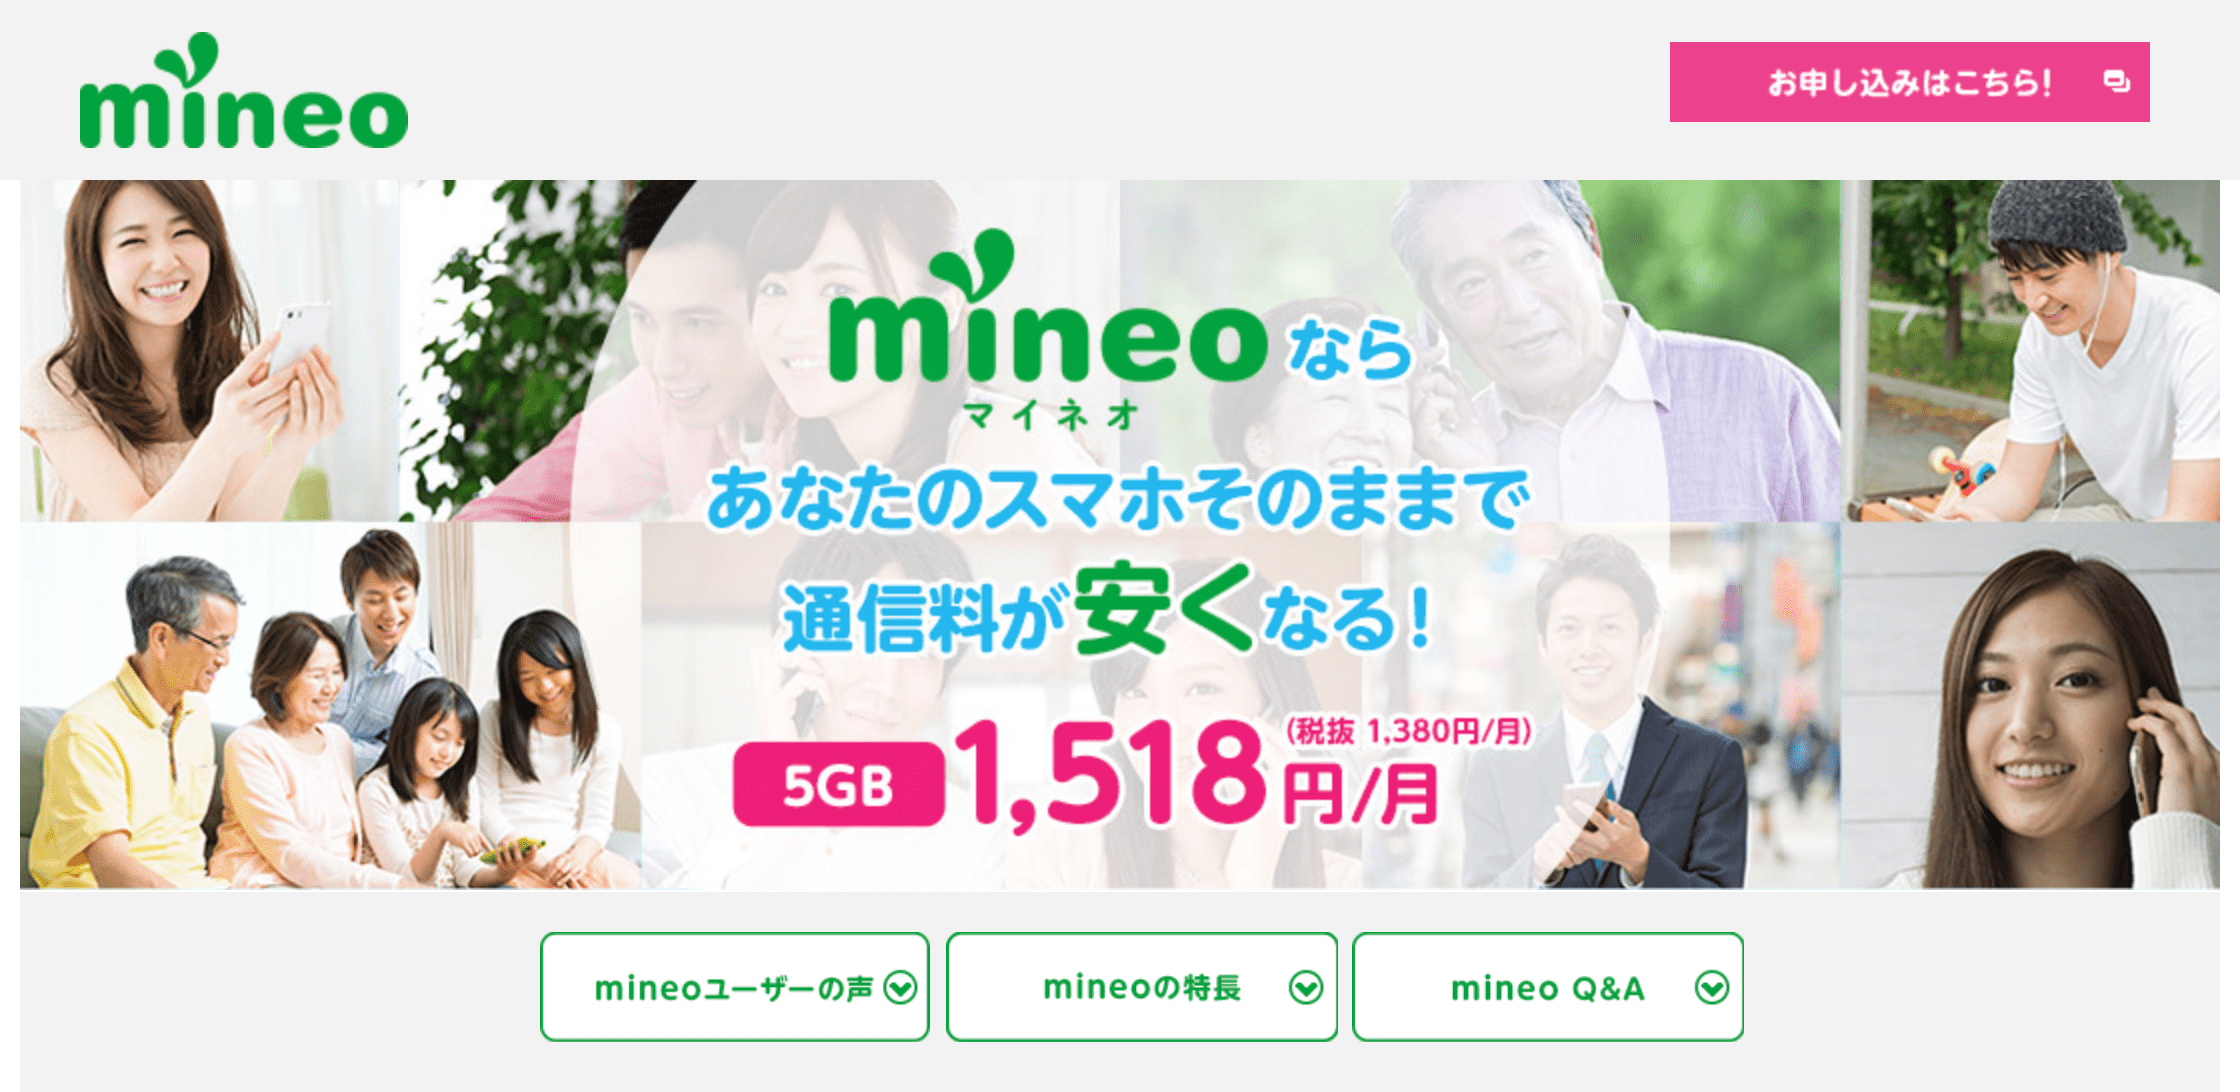 mineo210706